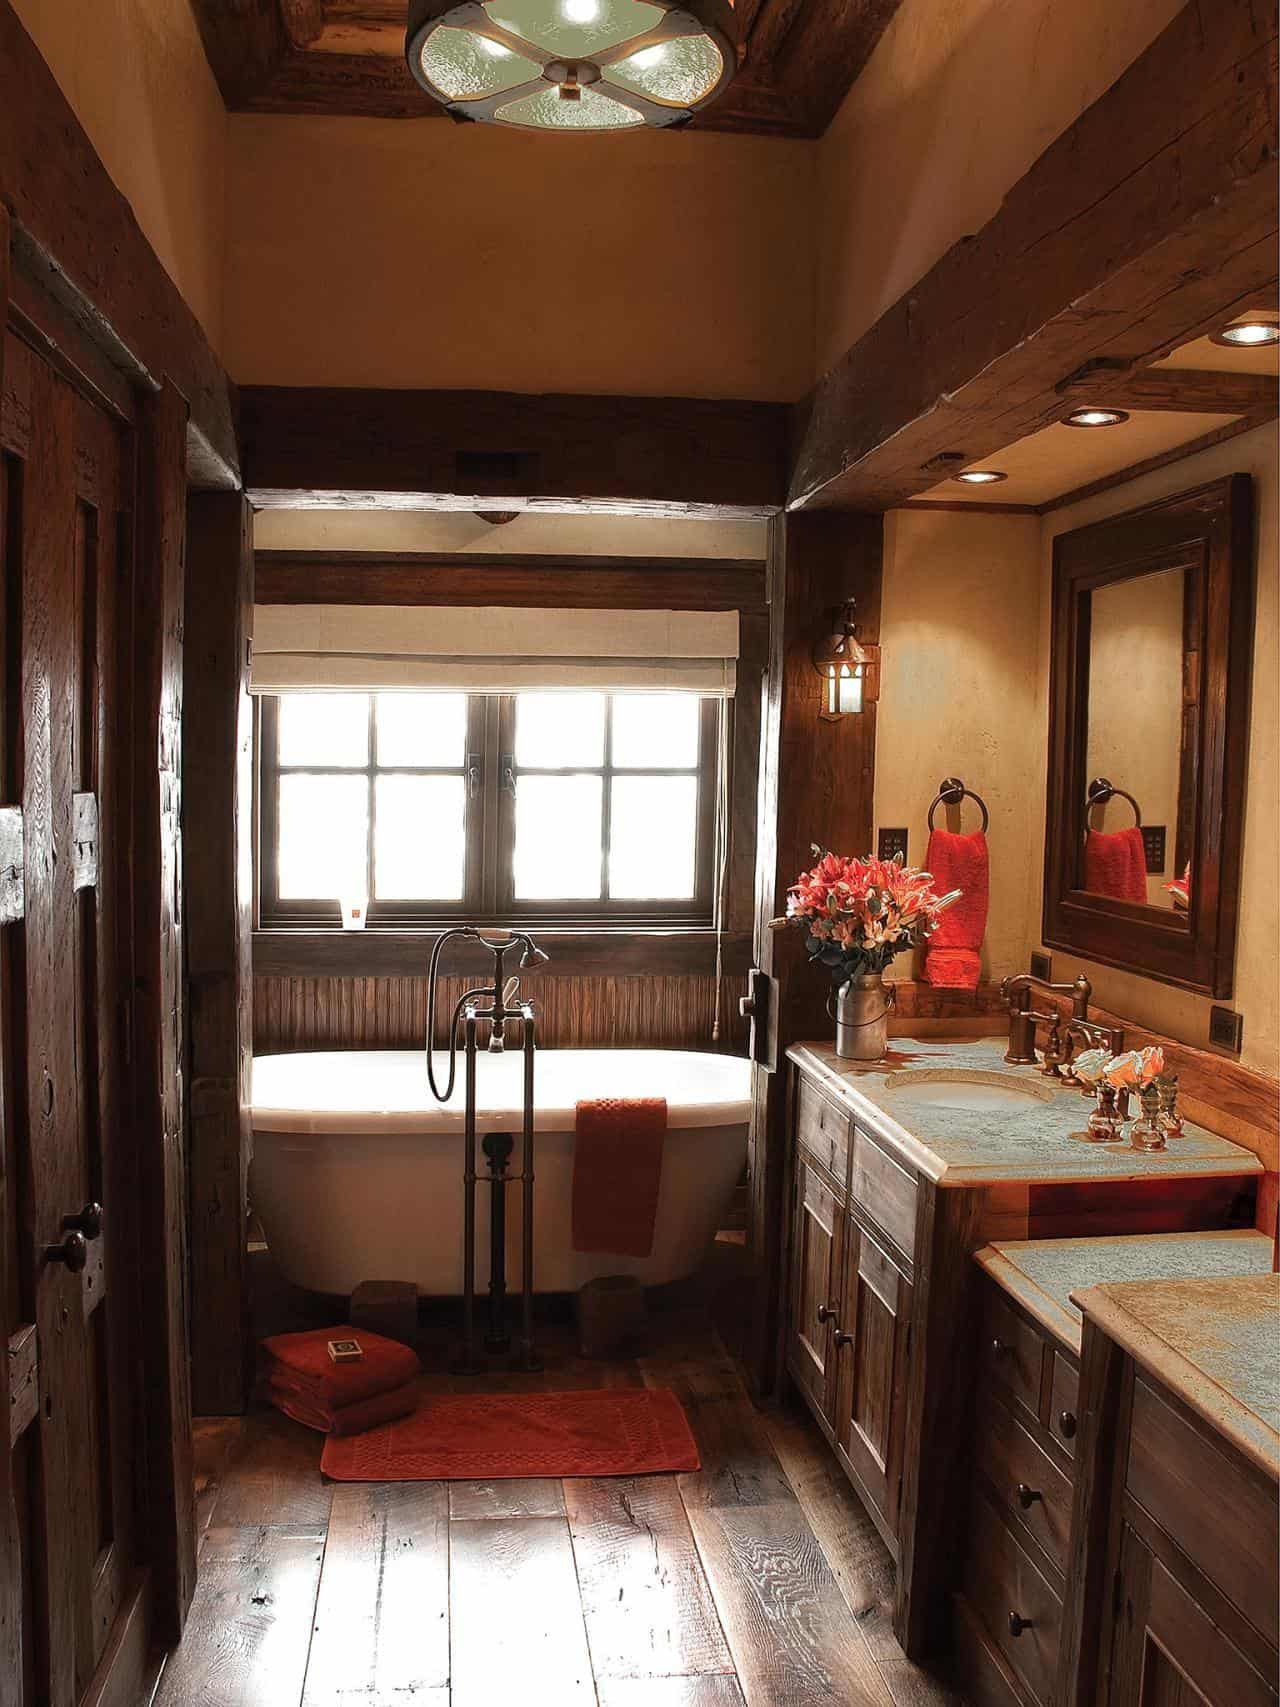 The Lodge-Style Bathroom